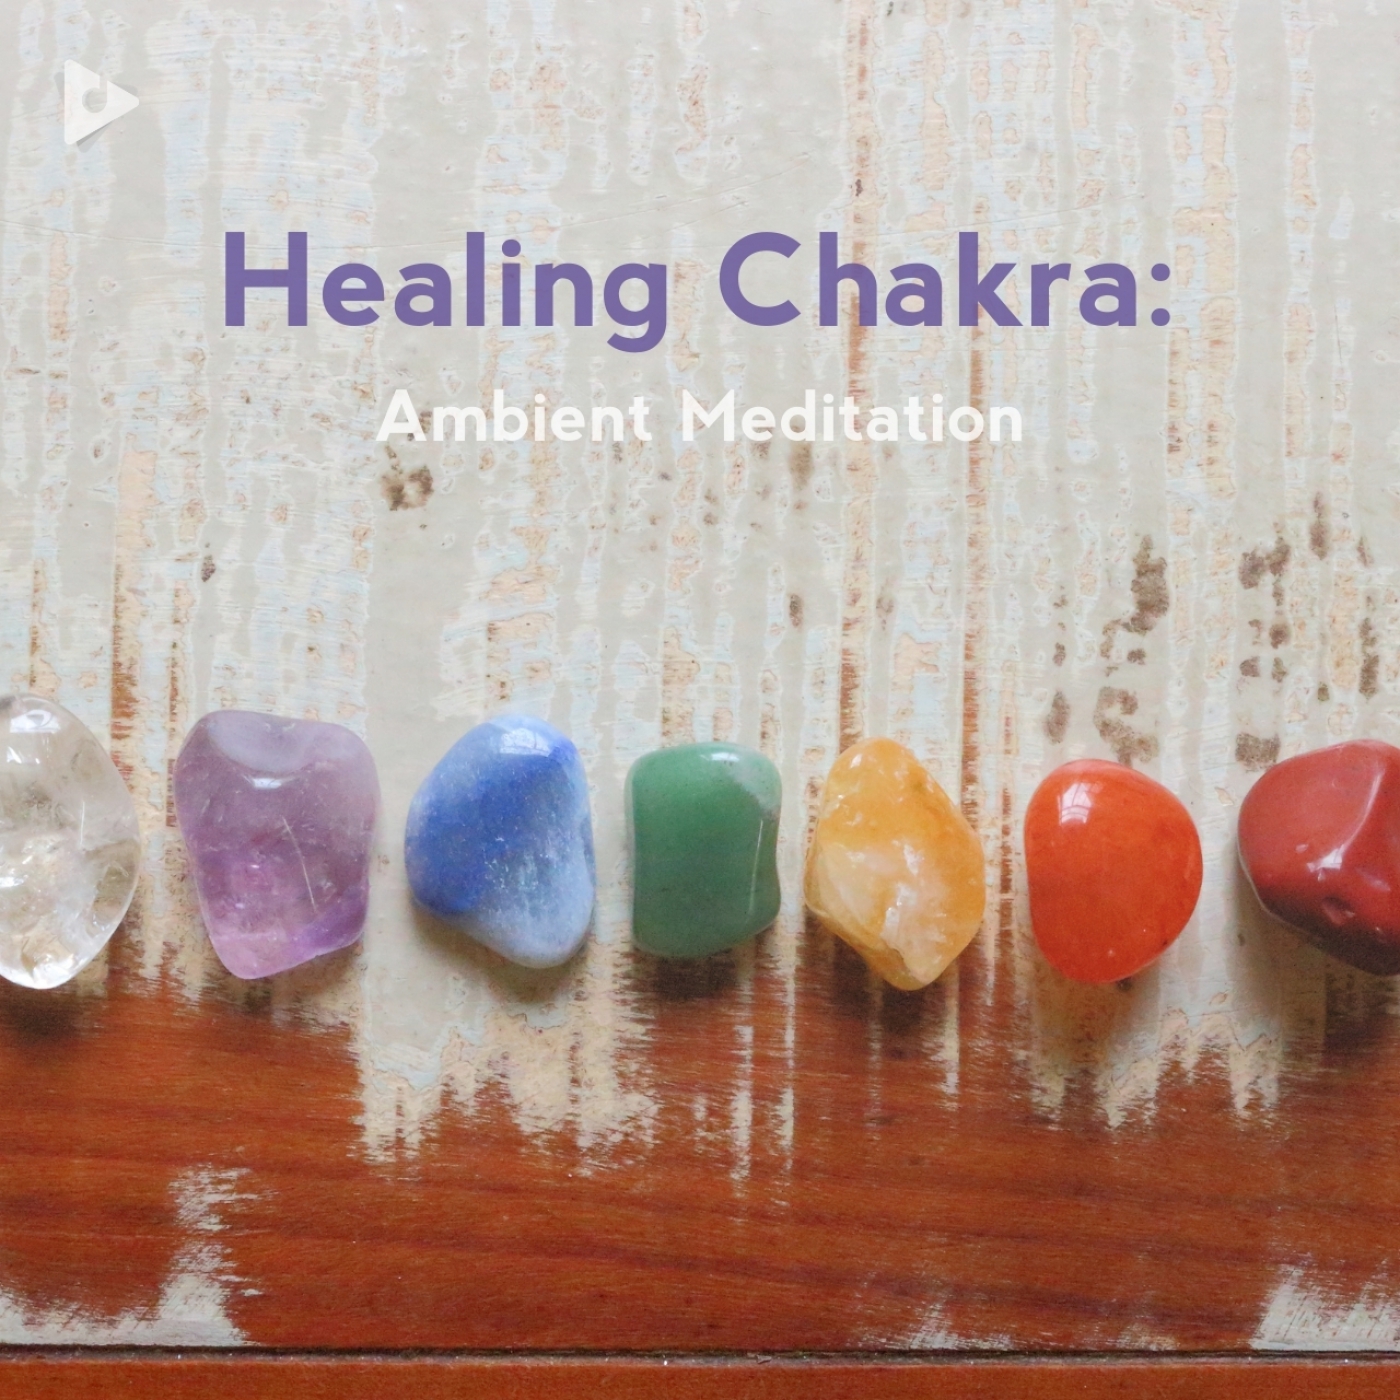 Healing Chakra: Ambient Meditation